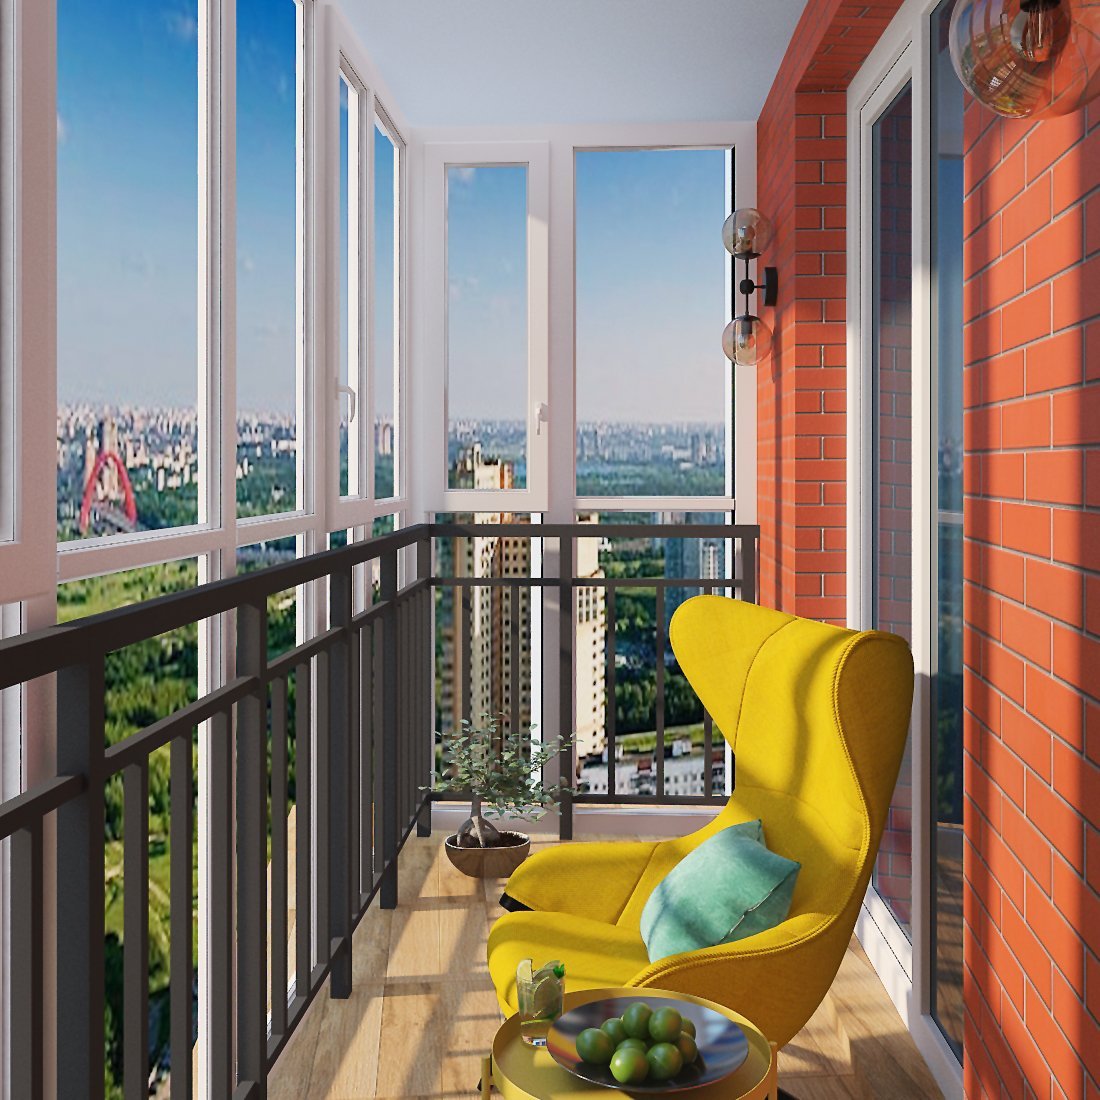 Отделка балкона с панорамными окнами фото внутри дизайн